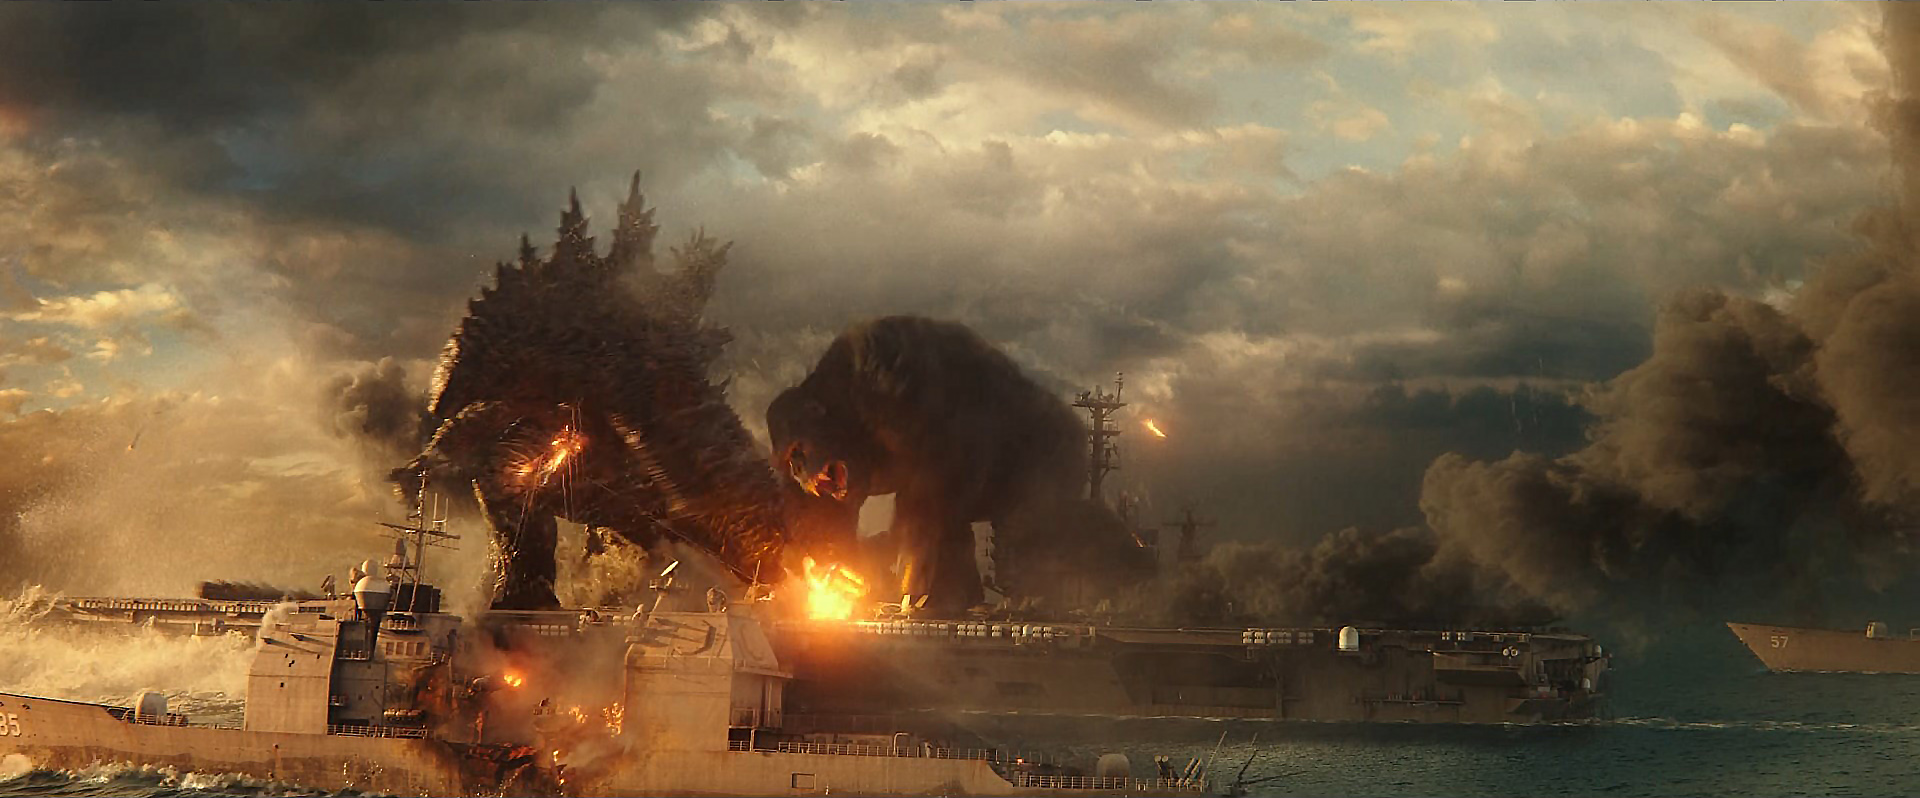 Godzilla vs Kong Trailer Still 41 - Kong punches Godzilla